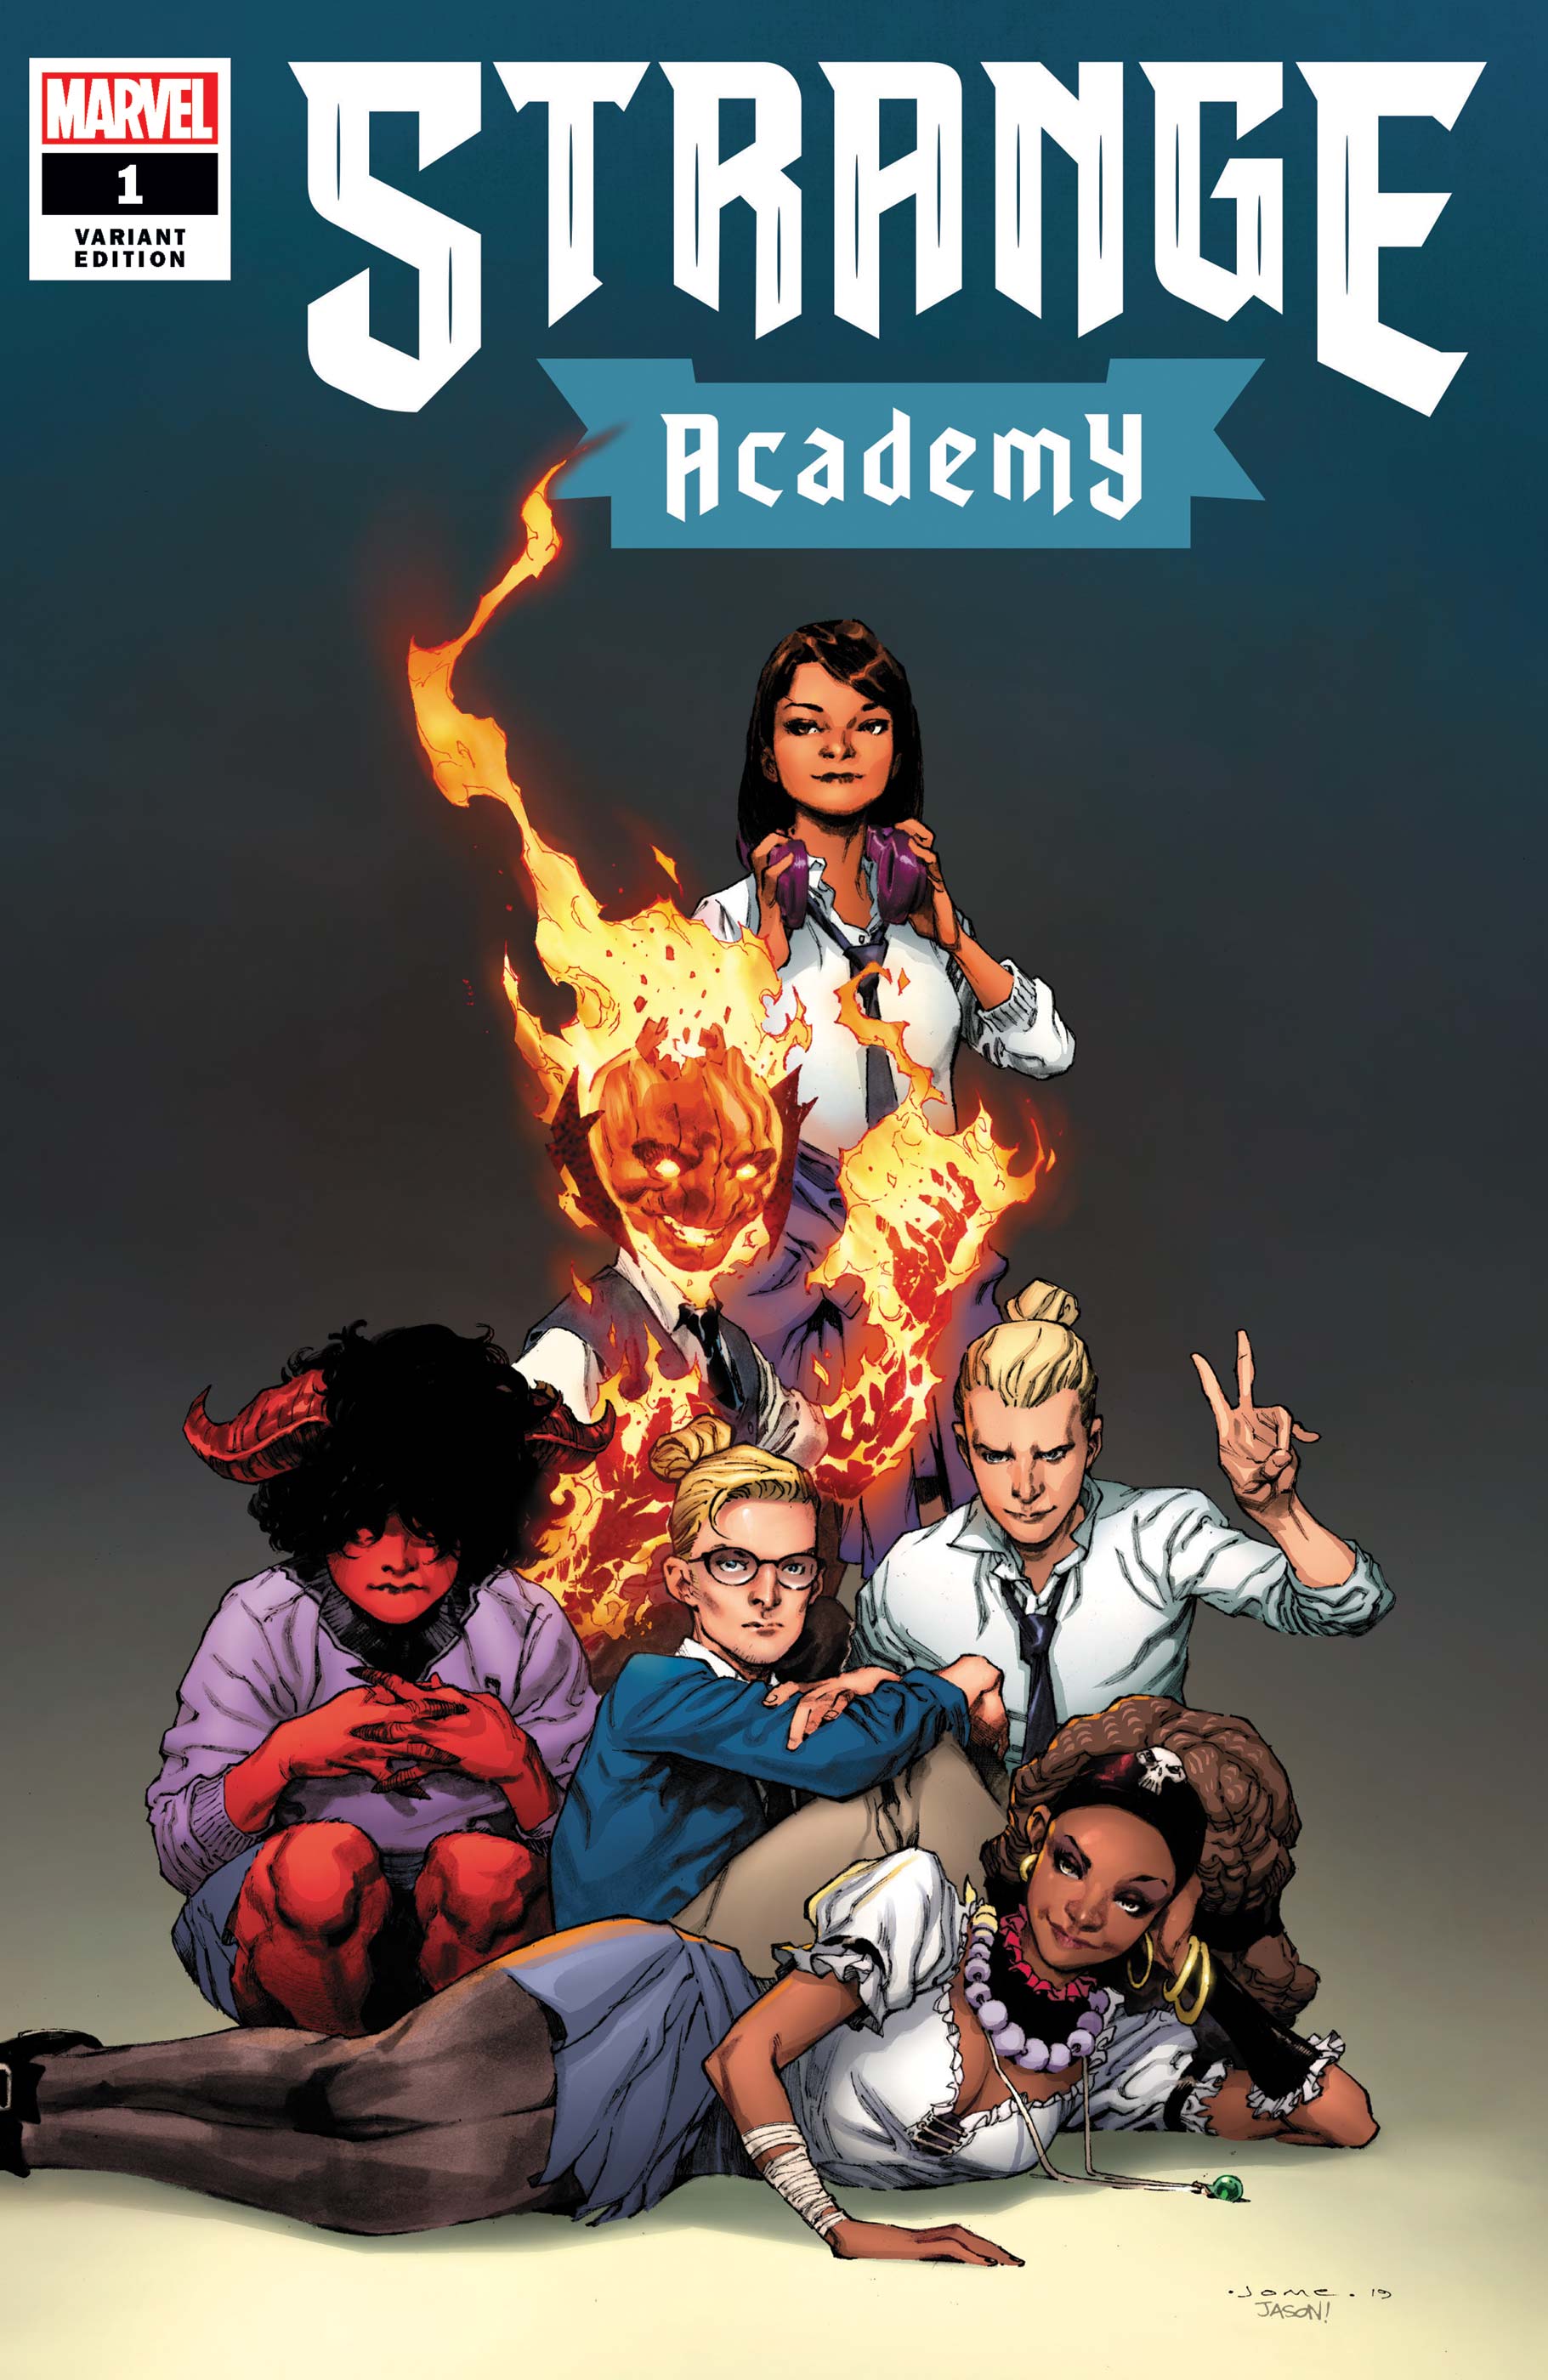 Strange Academy (2020) #1 (Variant)